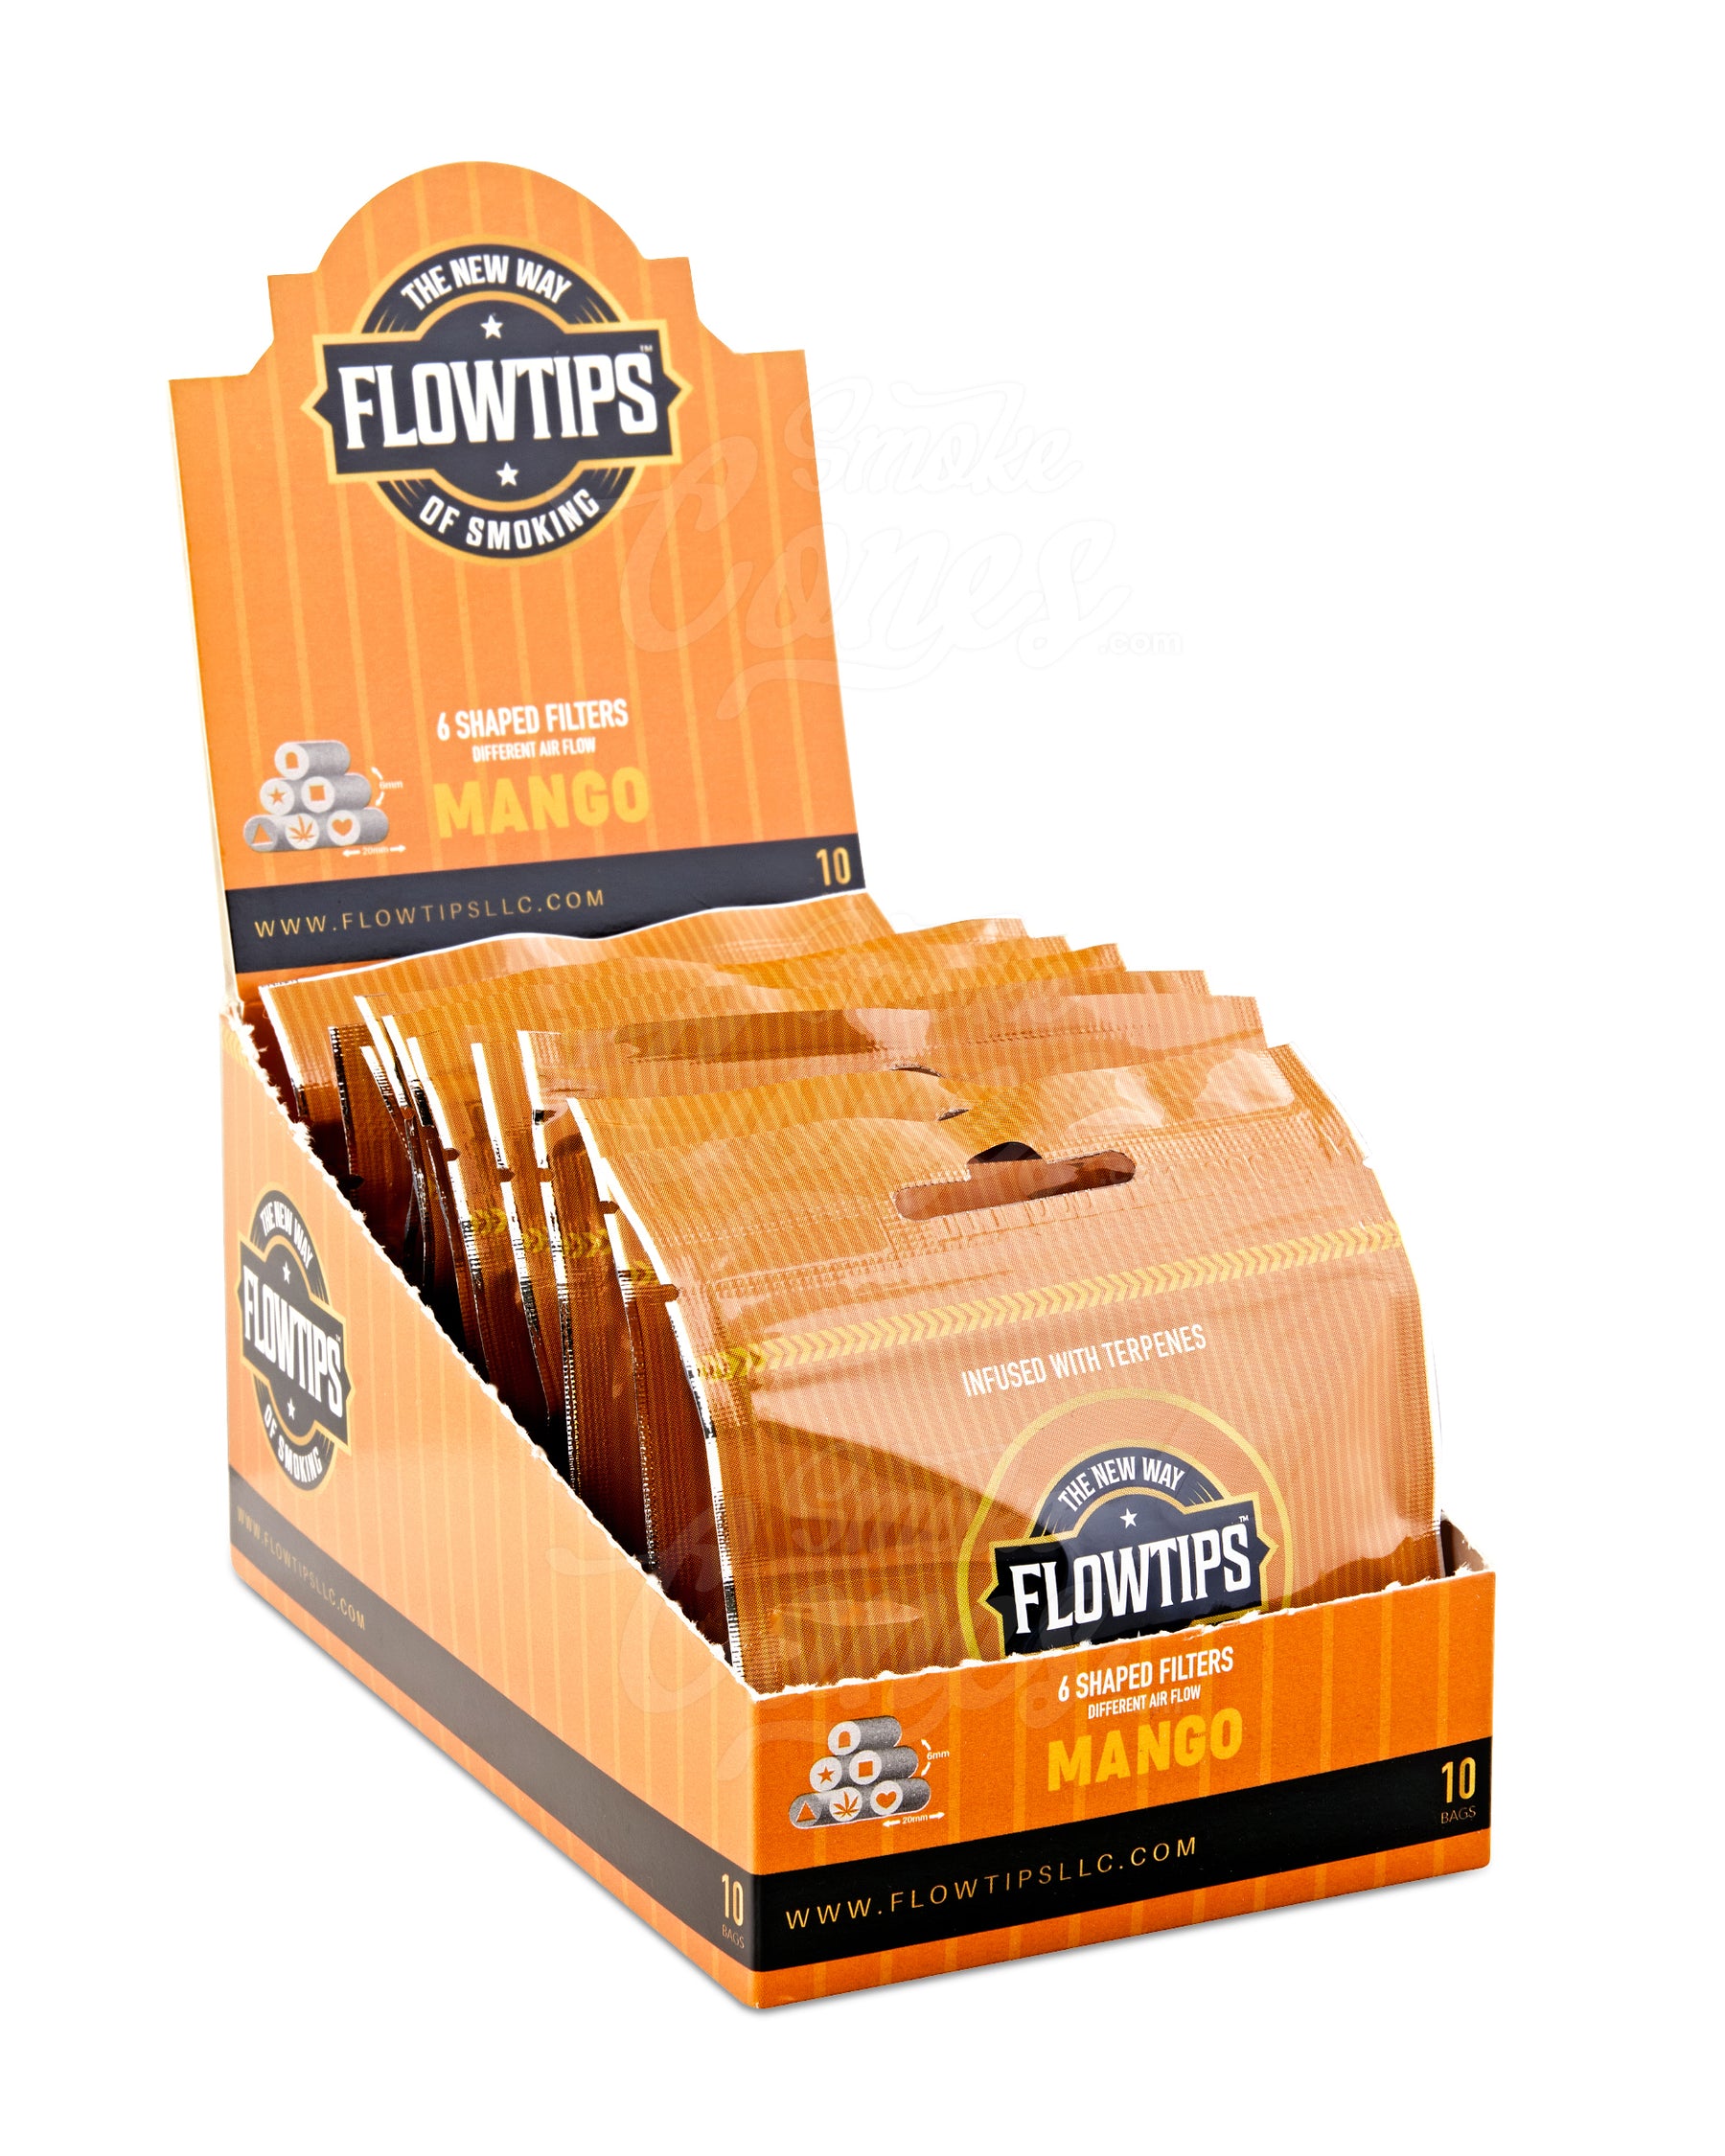 FLOWTIPS 20mm Terpene-Infused Mango Filter Tips 10/Box - 1